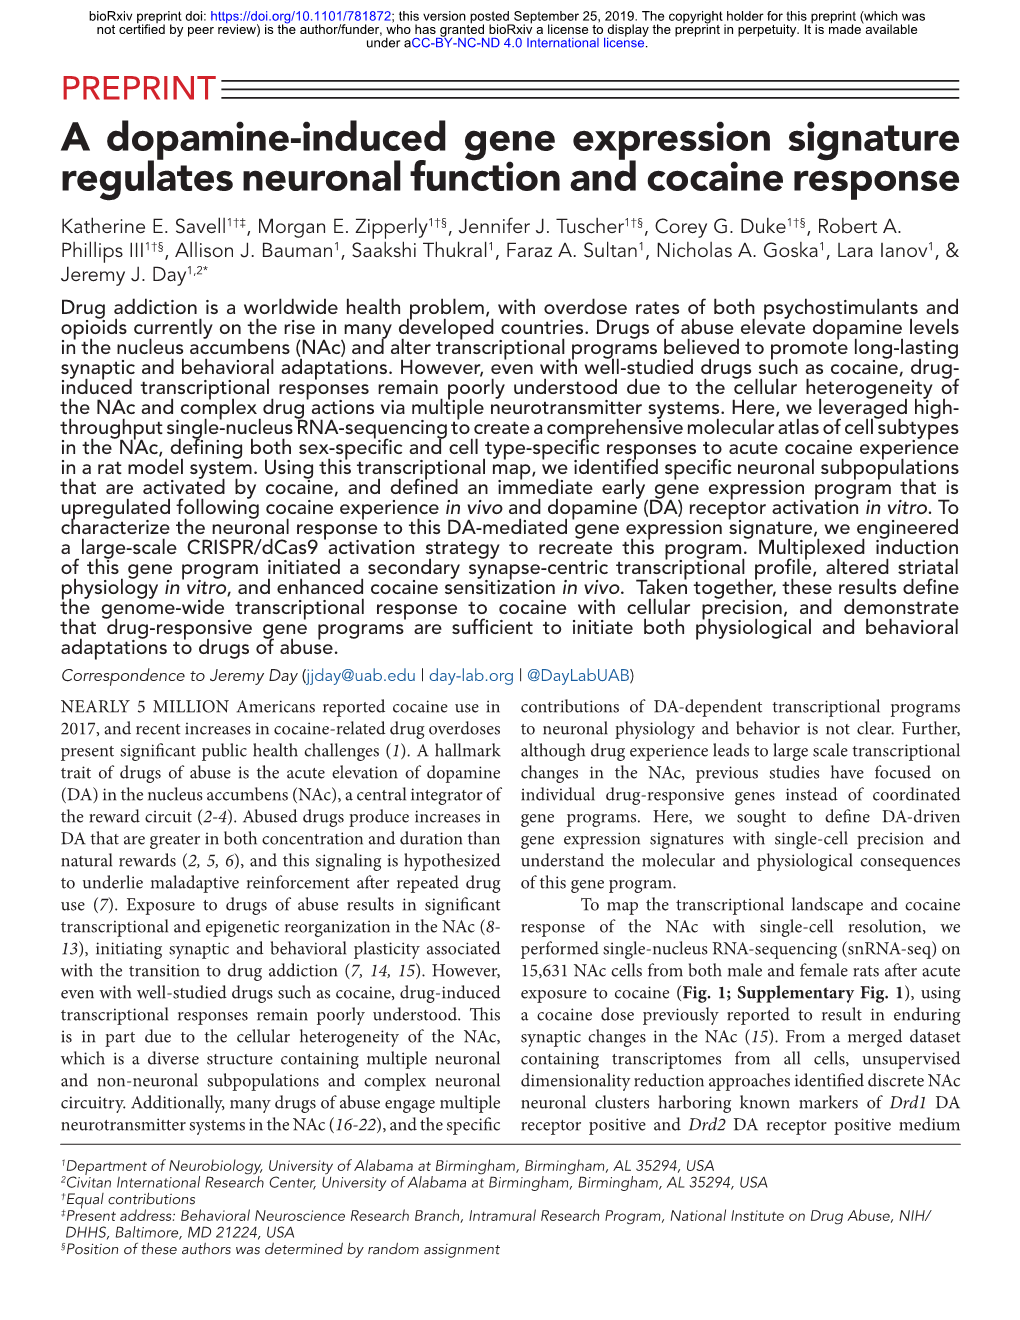 A Dopamine-Induced Gene Expression Signature Regulates Neuronal Function and Cocaine Response Katherine E